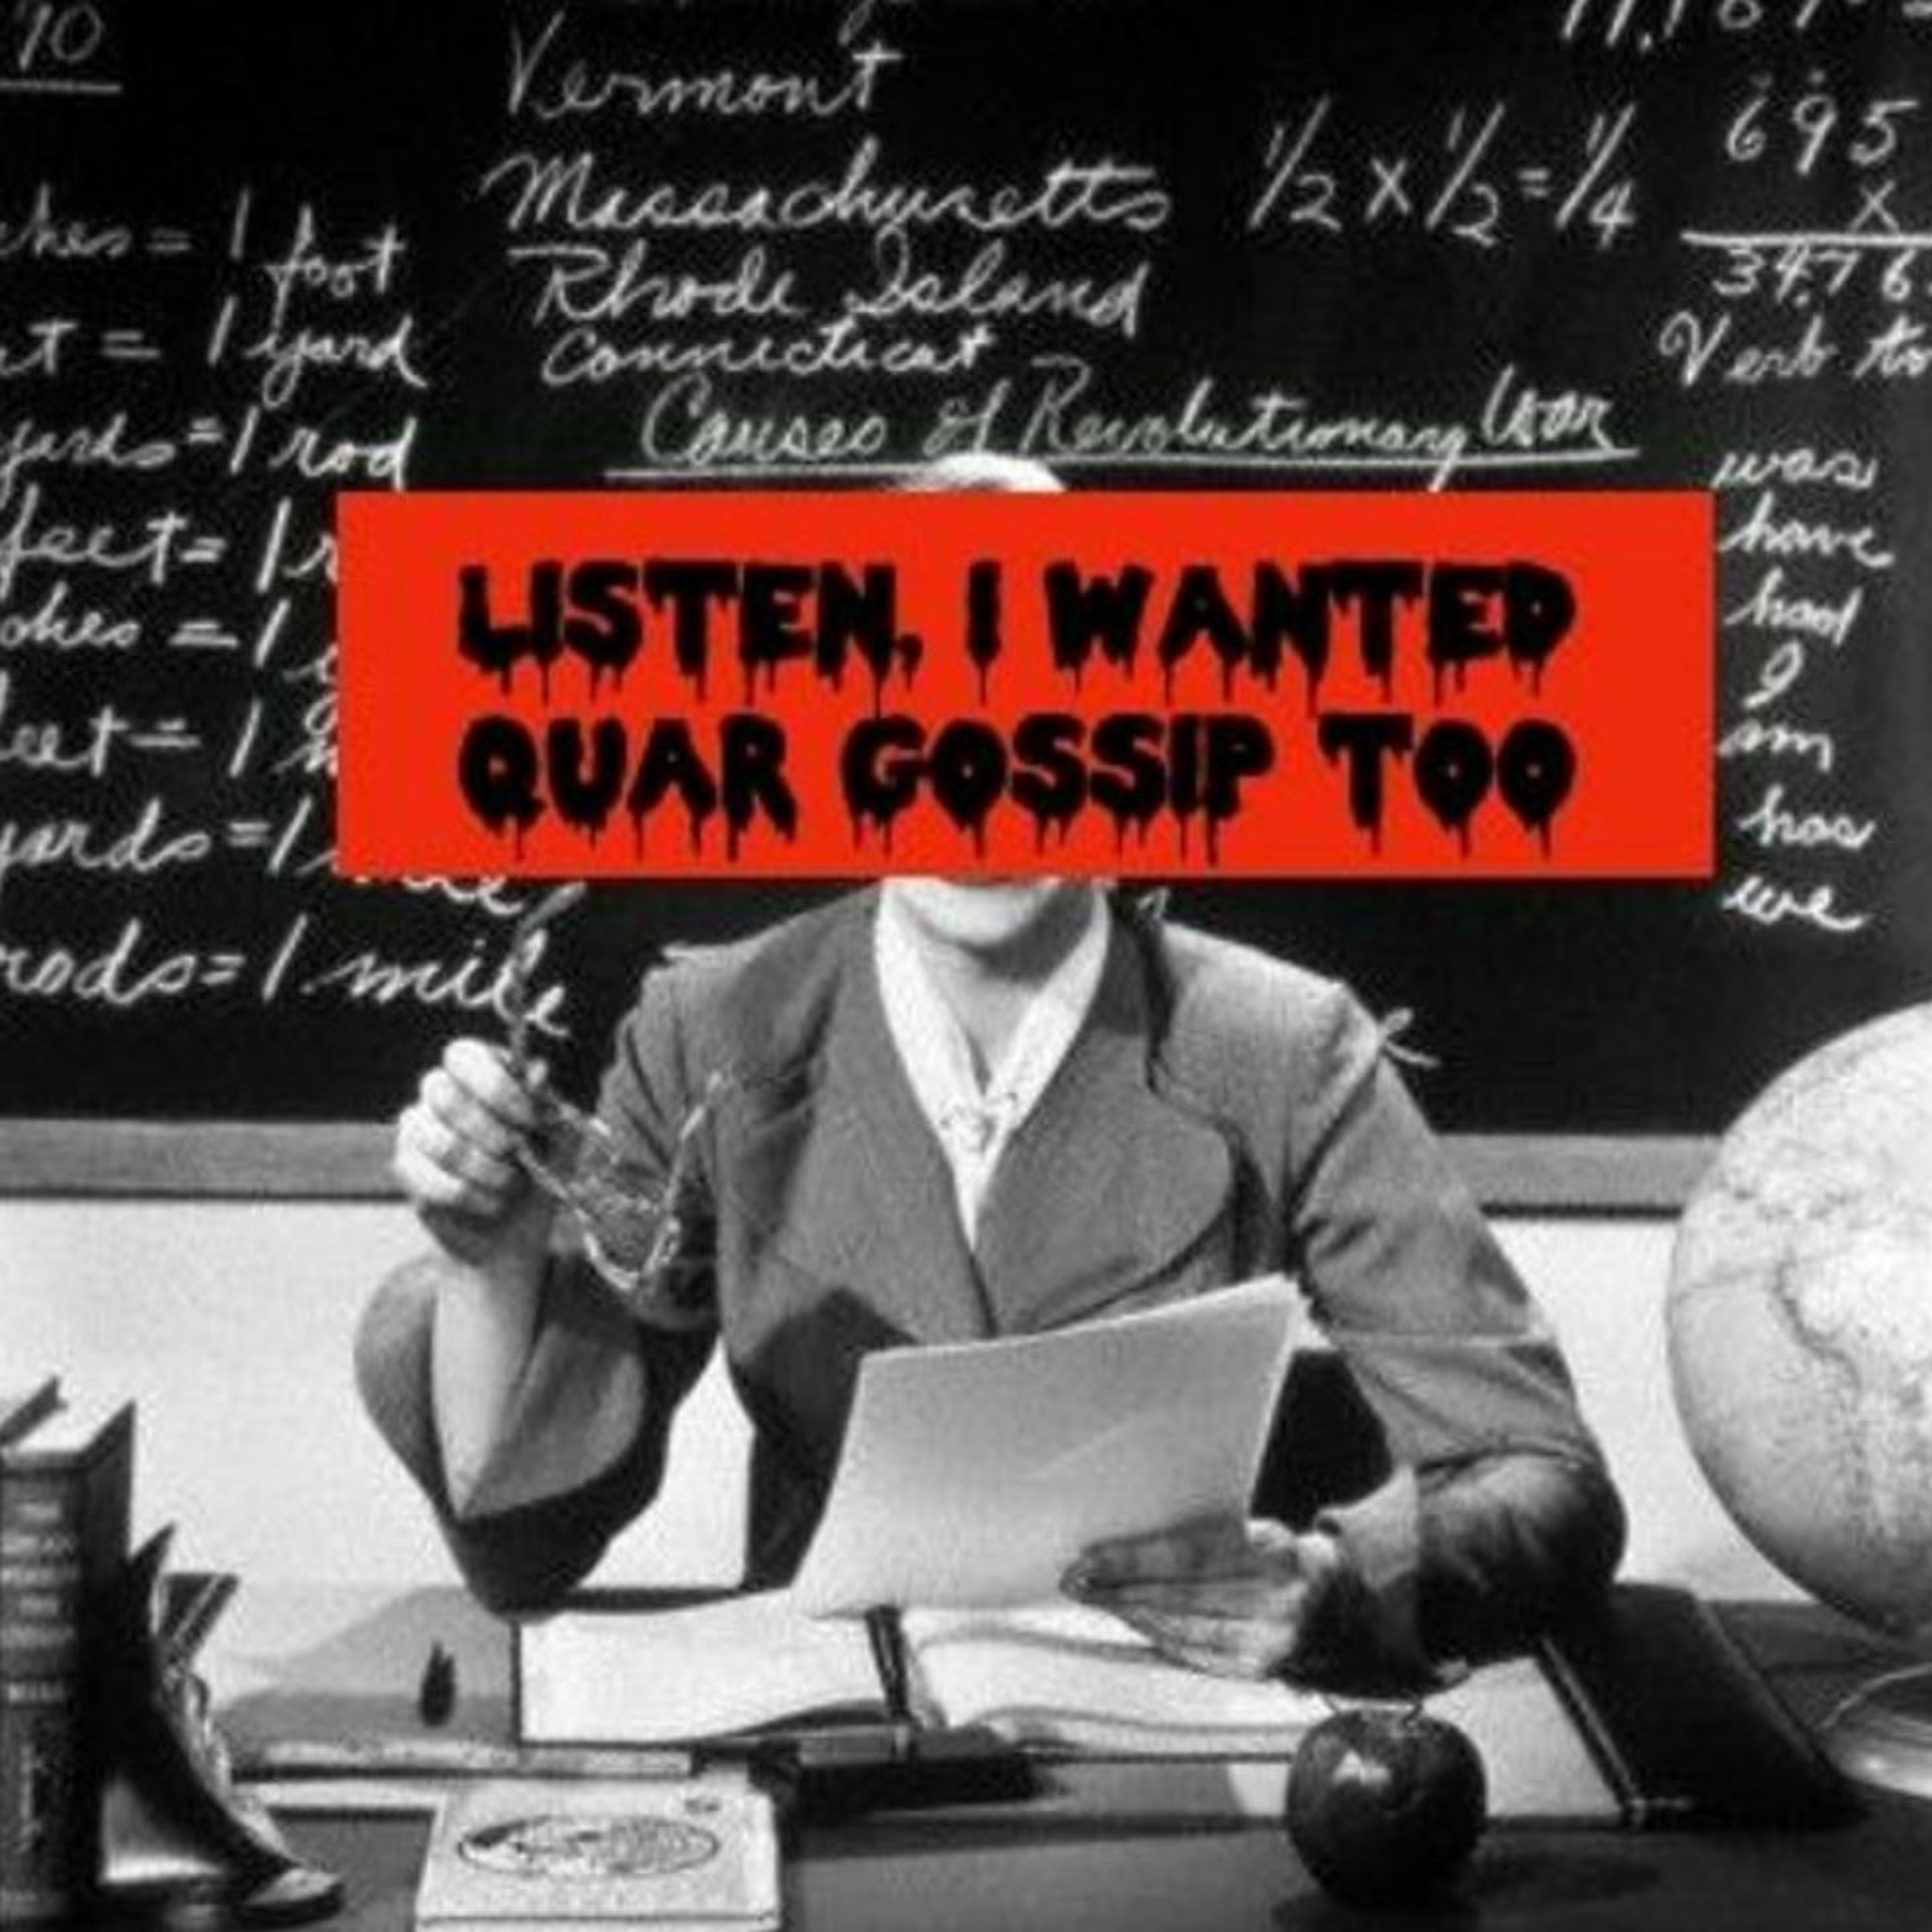 UNLOCKED! Episode 71: Listen I Wanted Quar Gossip Too